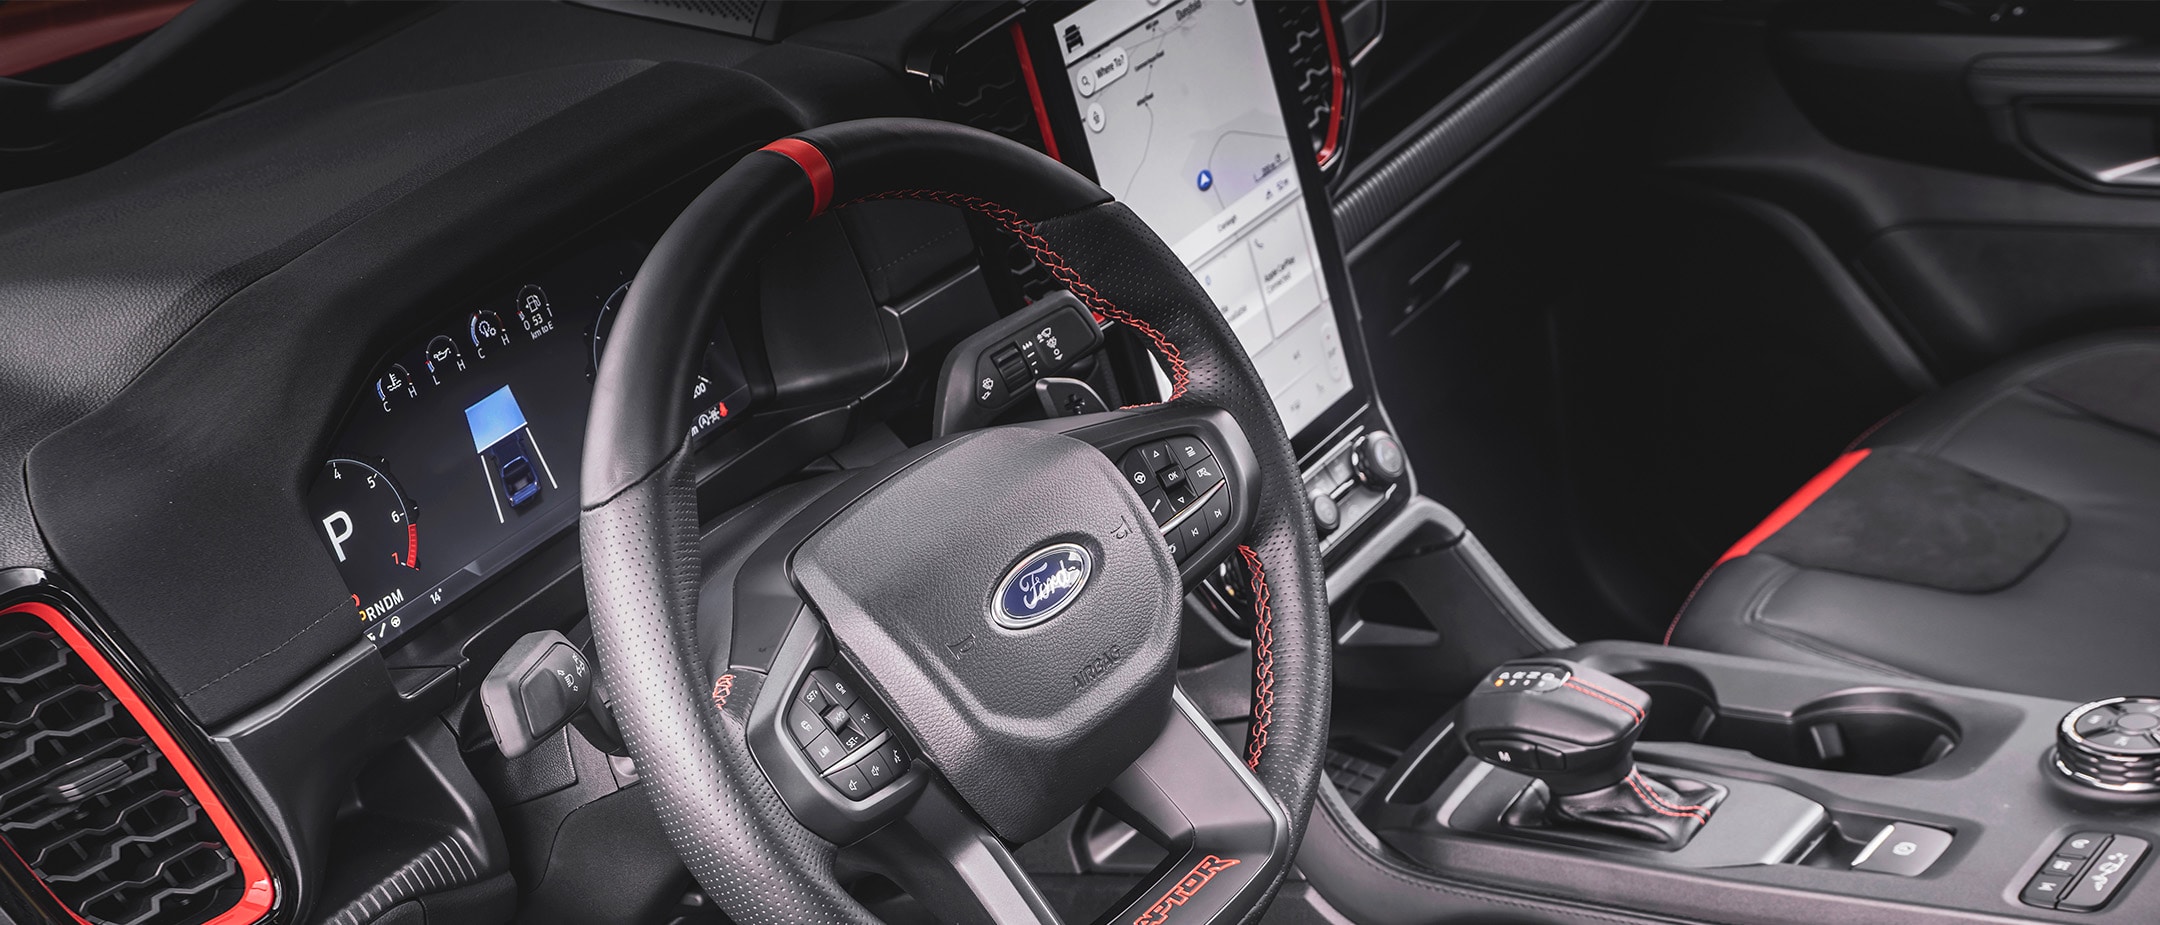 Image showing the Ford Ranger Raptor interior.